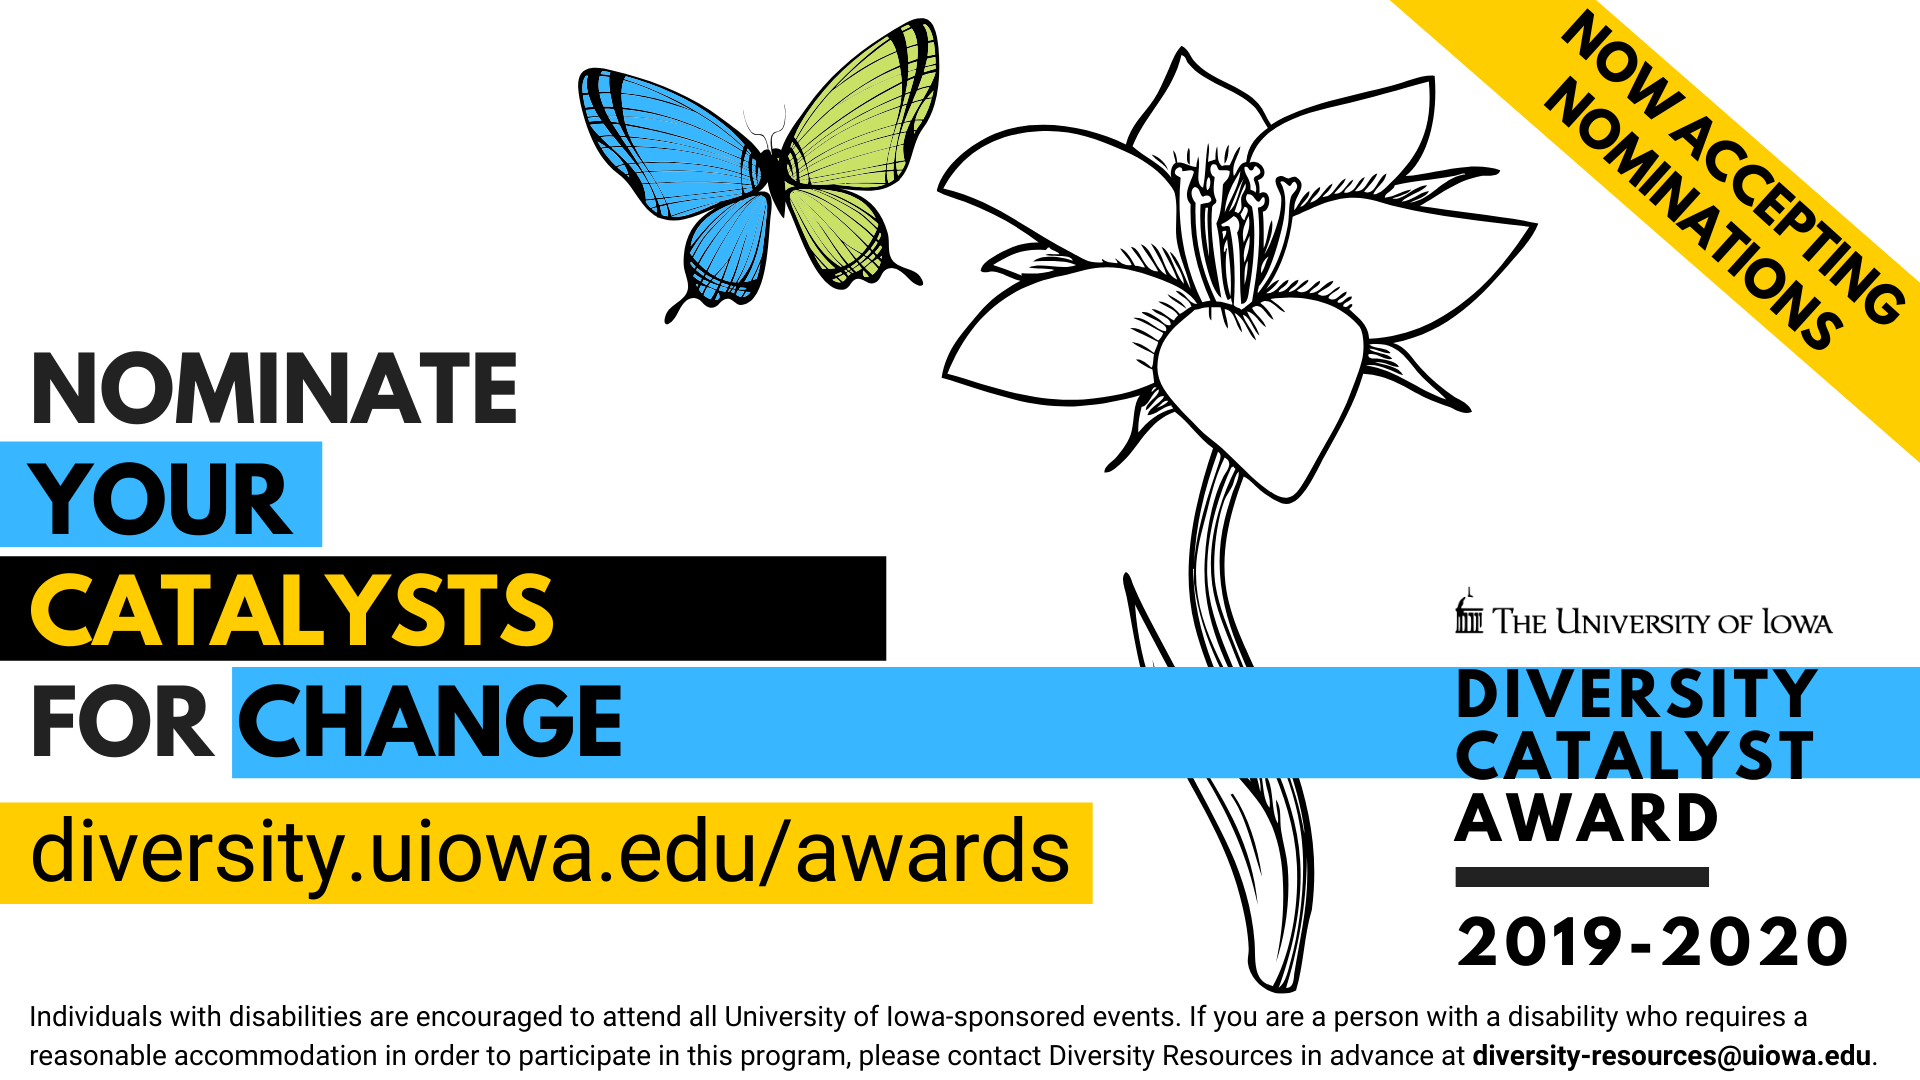 nominate a catalyst for change diversity dot uiowa dot edu